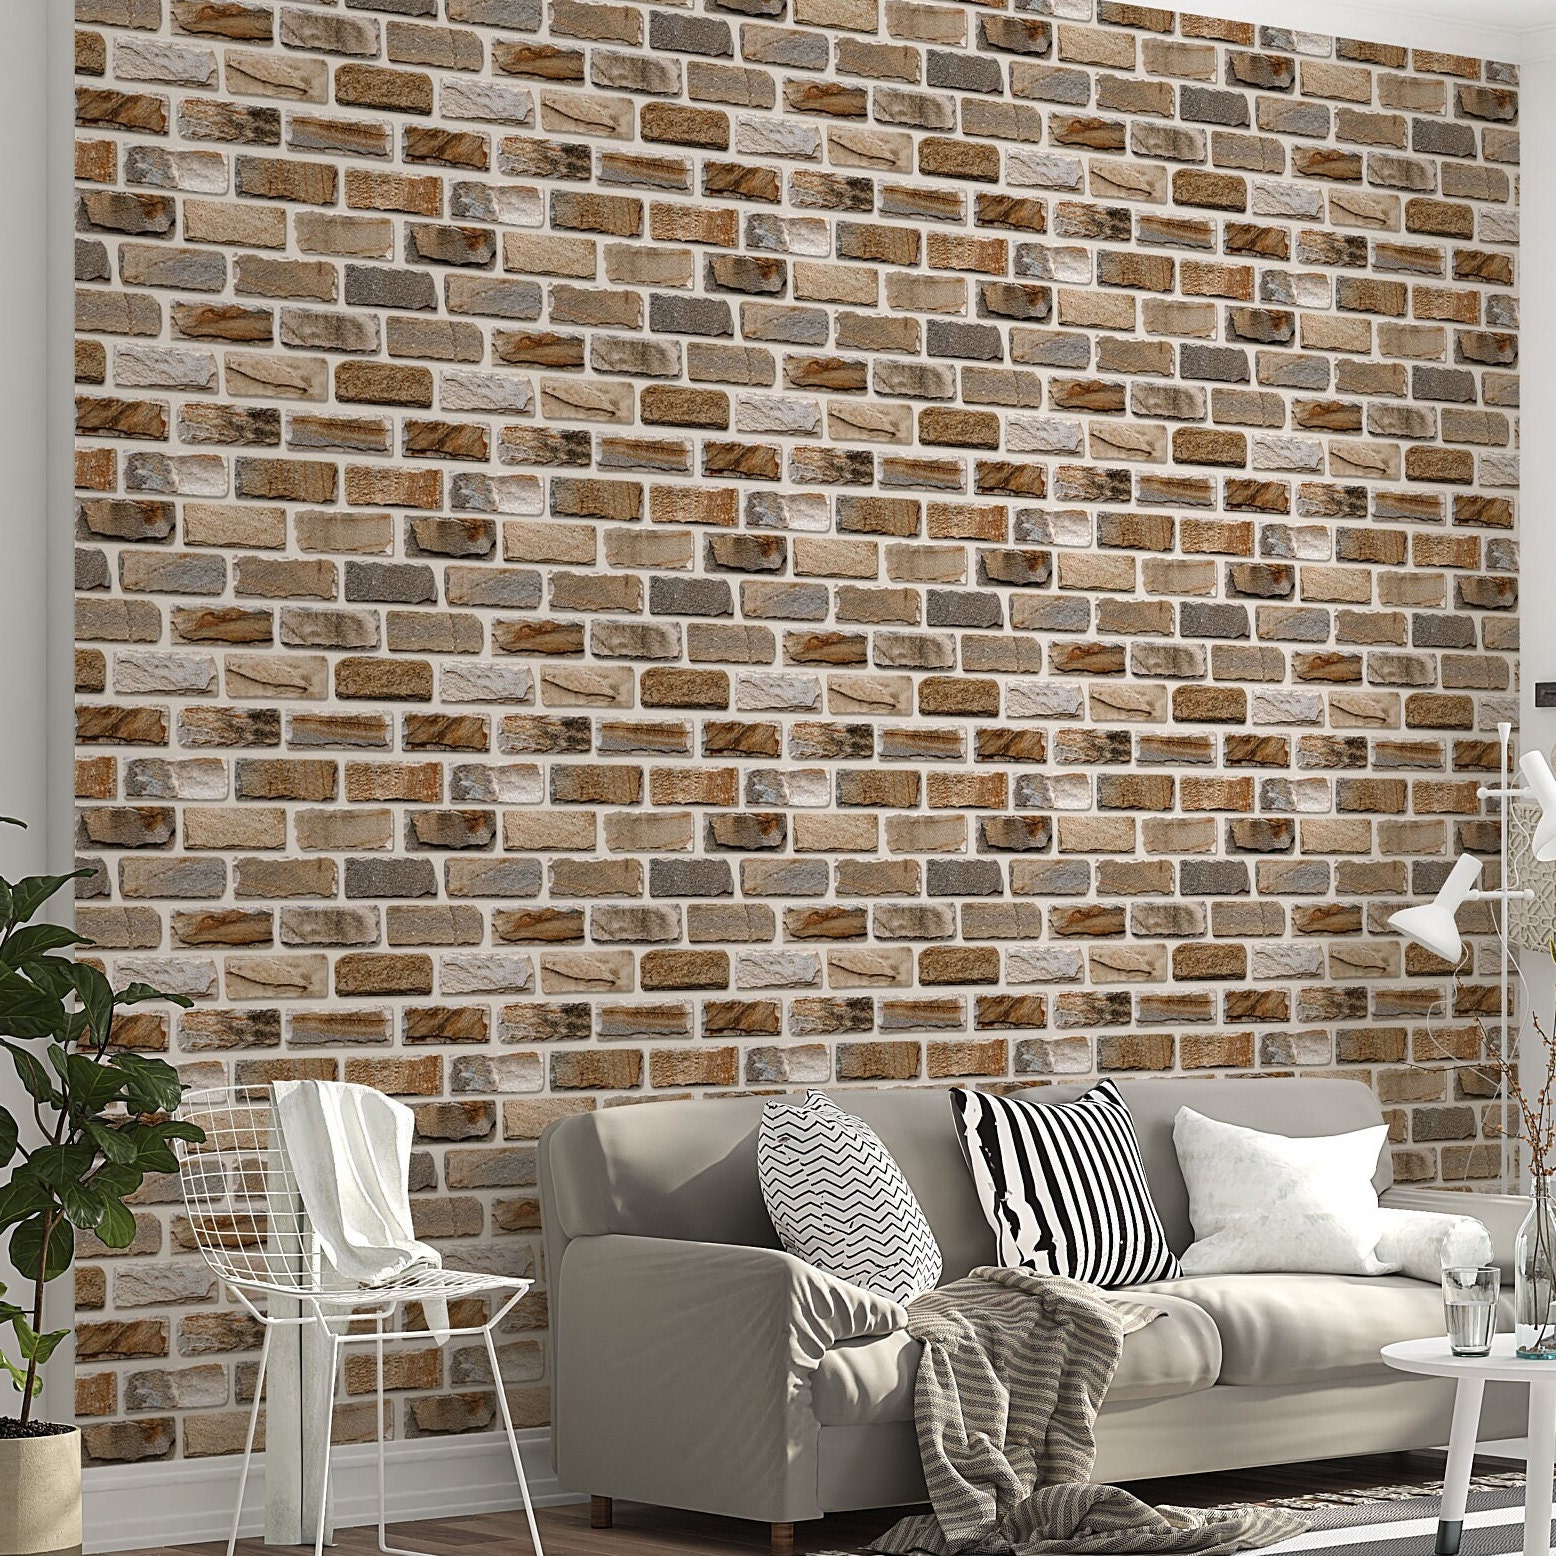 Brick Peel and Stick Wallpaper  Brick Wallpaper  Easily Removable  Wallpaper  3D Wallpaper Brick Look  Use as